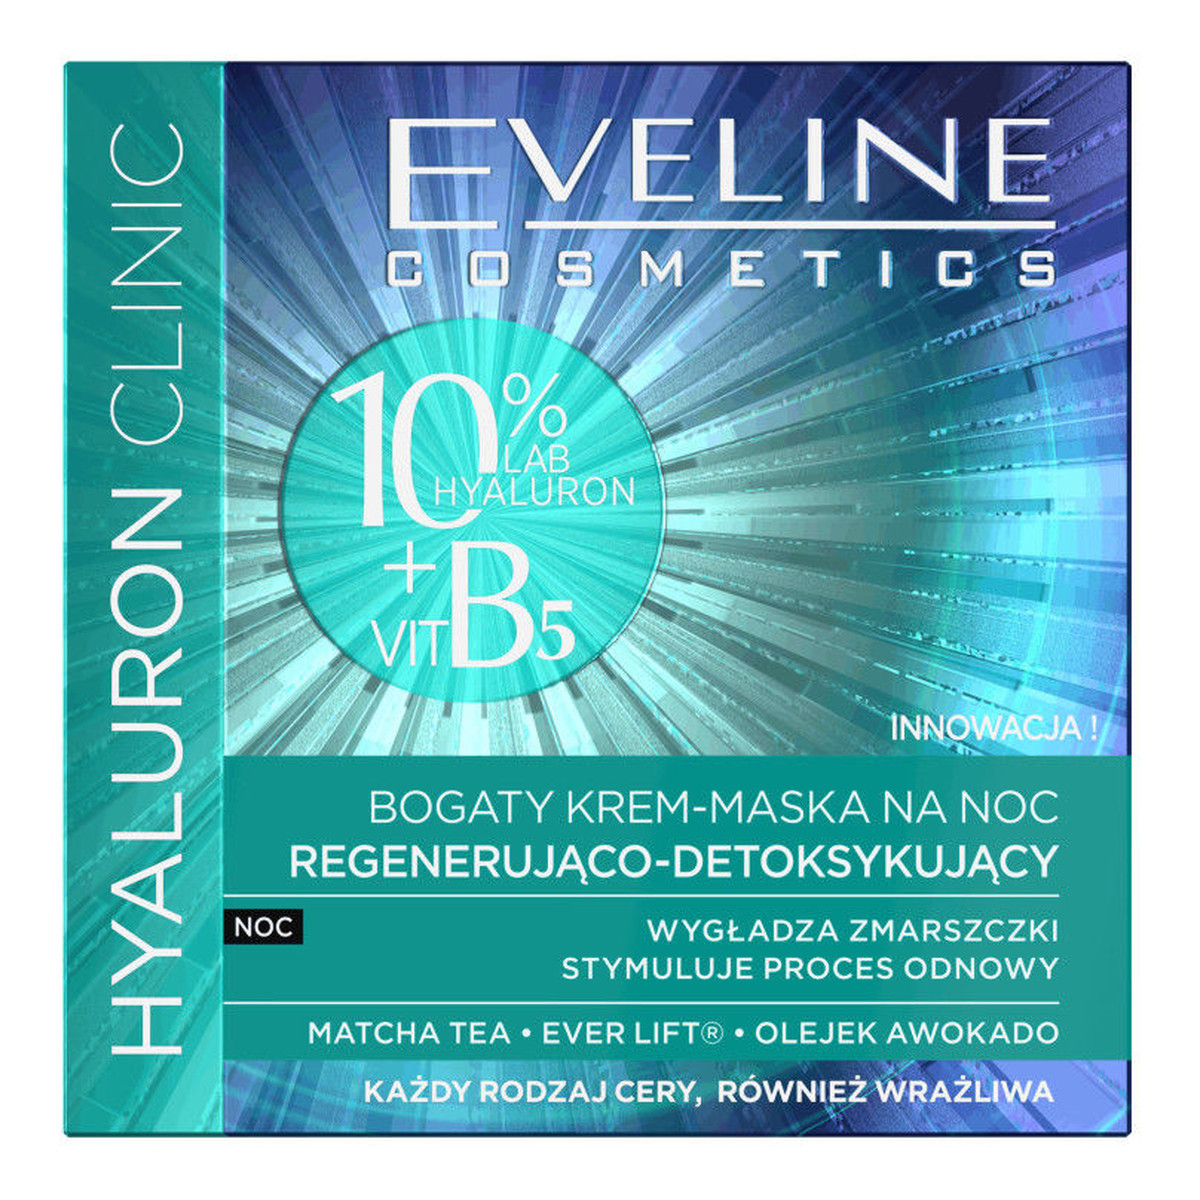 Eveline Hyaluron Clinic Bogaty Krem-Maska regenerująco-detoksykujący na noc 50ml